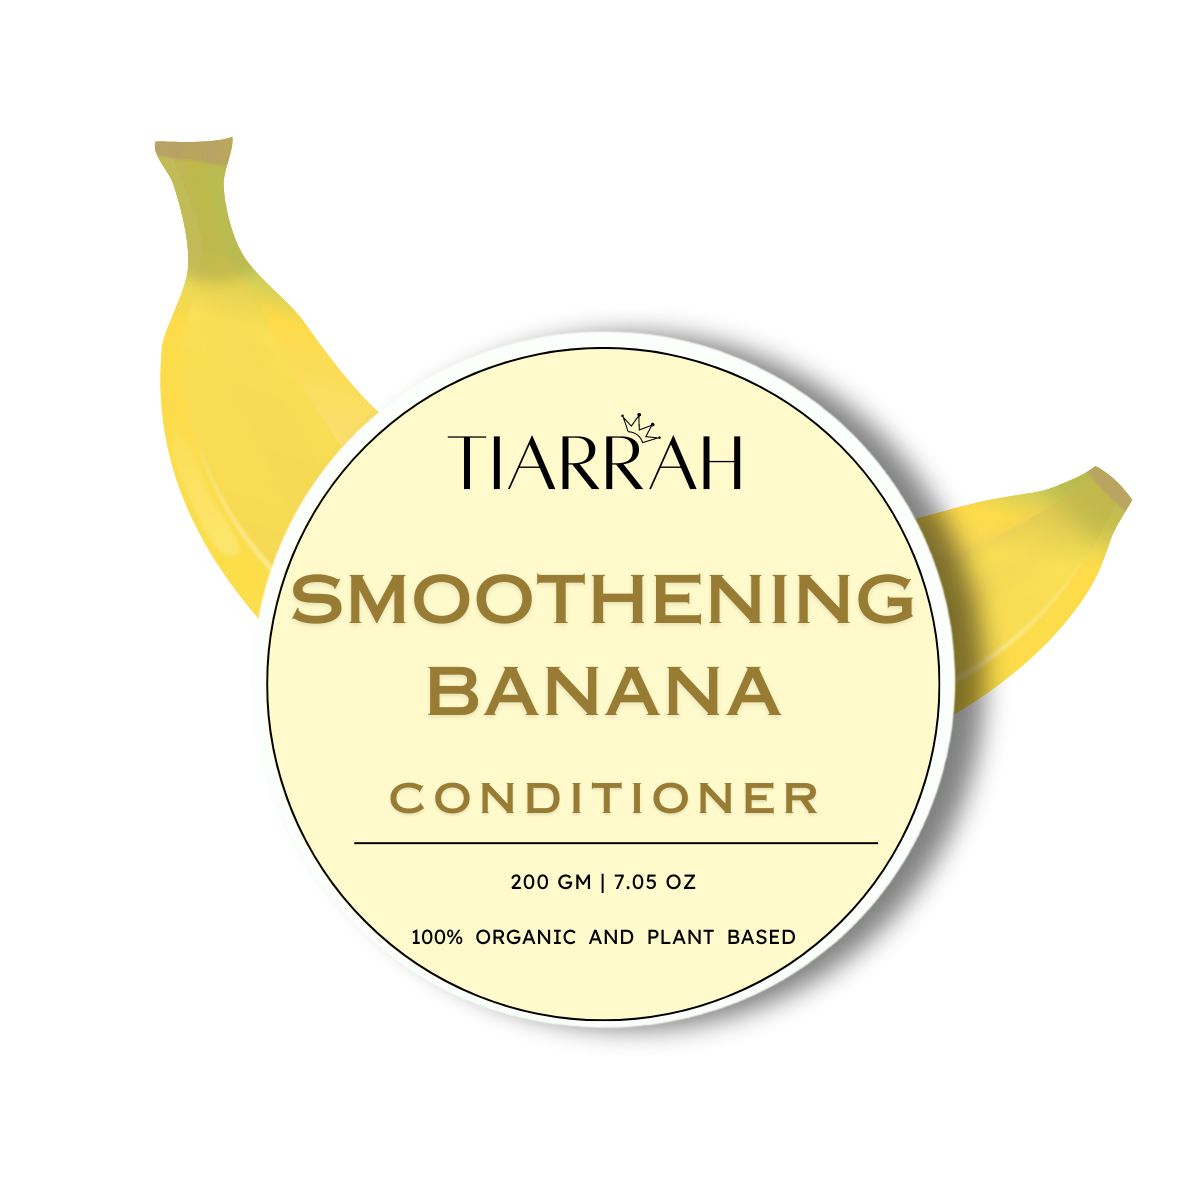 Tiarrah Smoothening Banana Hair Conditioner: Natural, Organic, Non-Toxic - The Luxury Bath and Body Care Shop